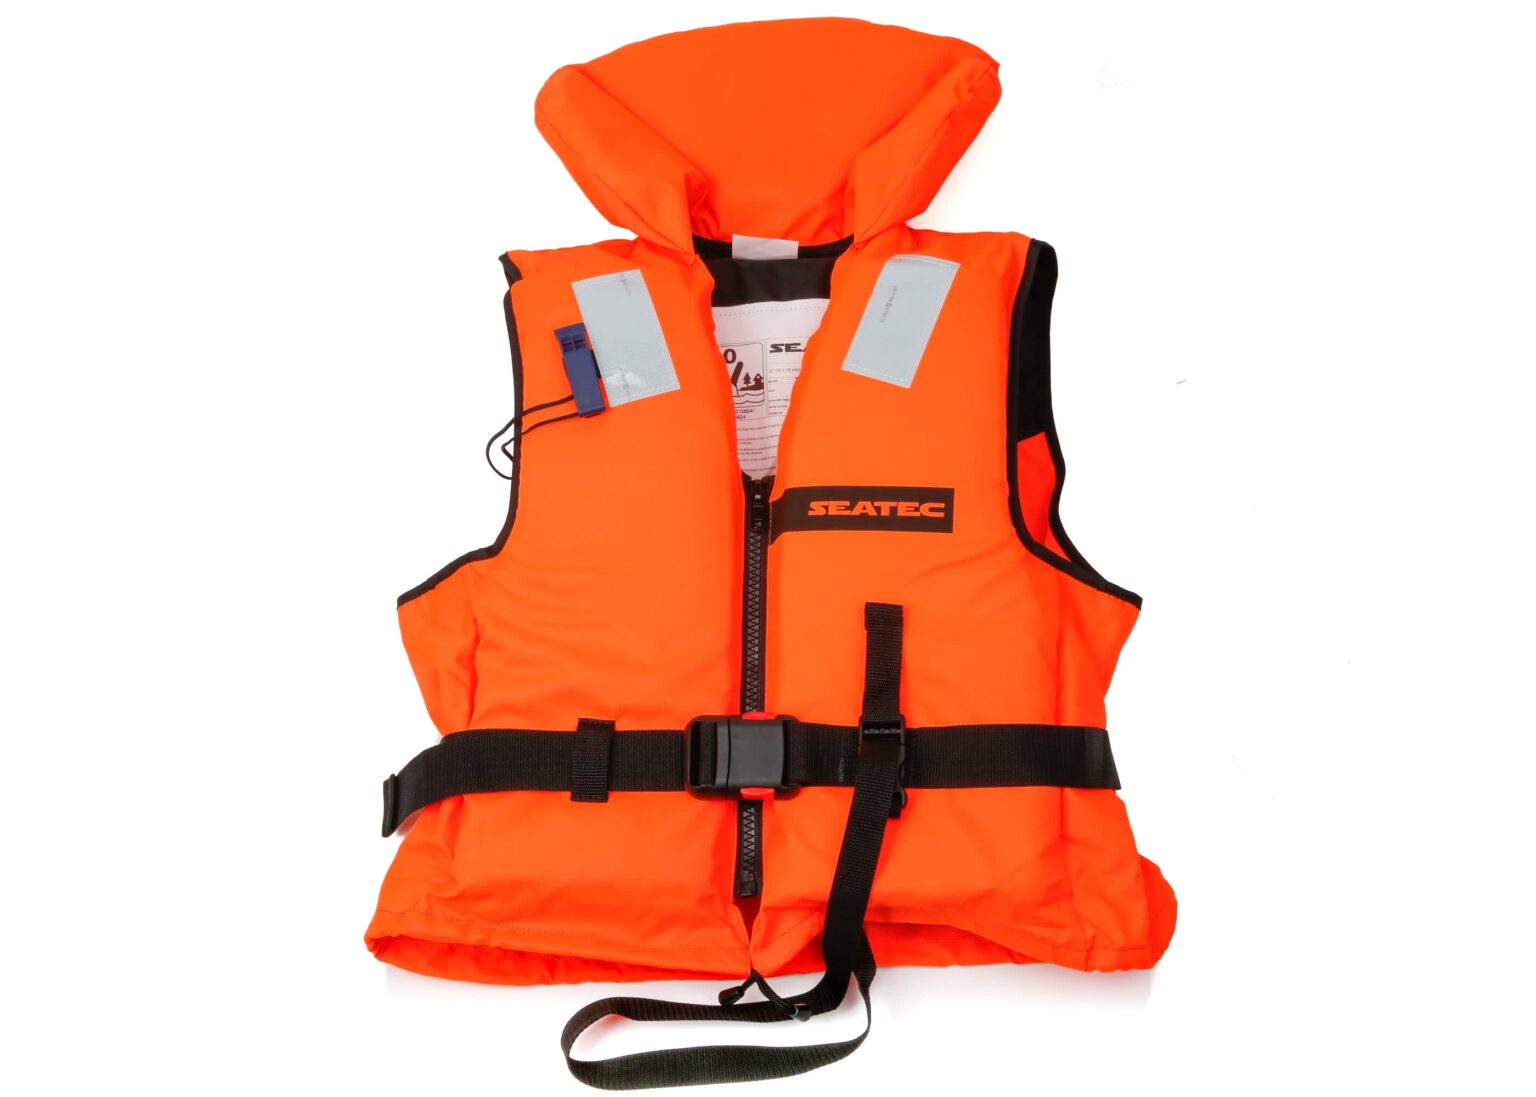 Seatec Foam Life Jacket - Fishing Tackle Direct